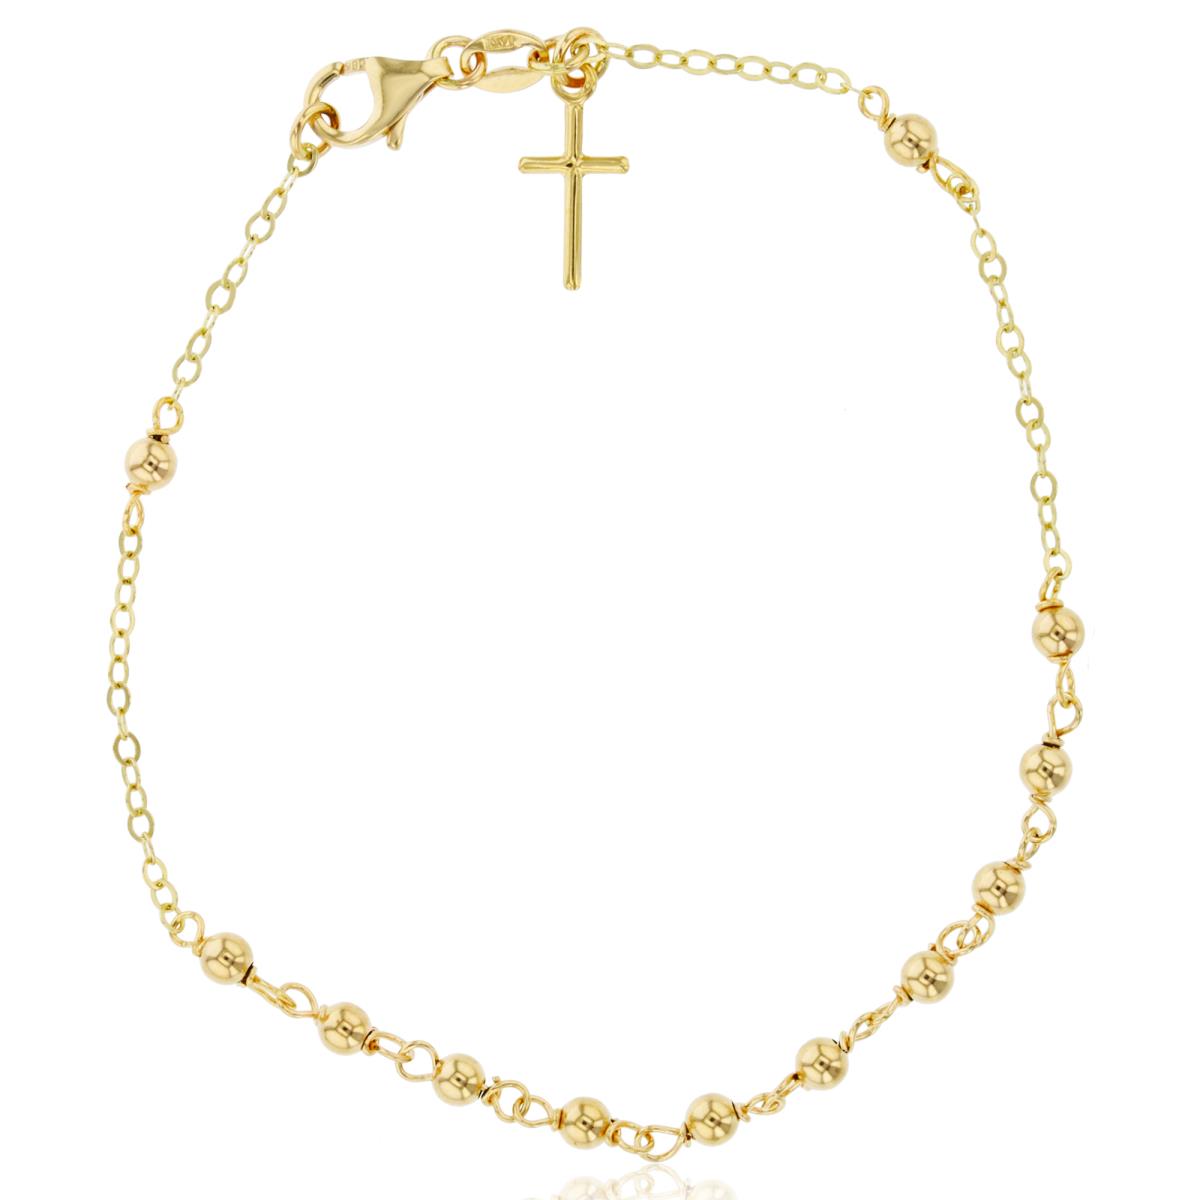 10K Yellow Gold 3mm Polished Beads Dangling Cross 7.25" Bracelet